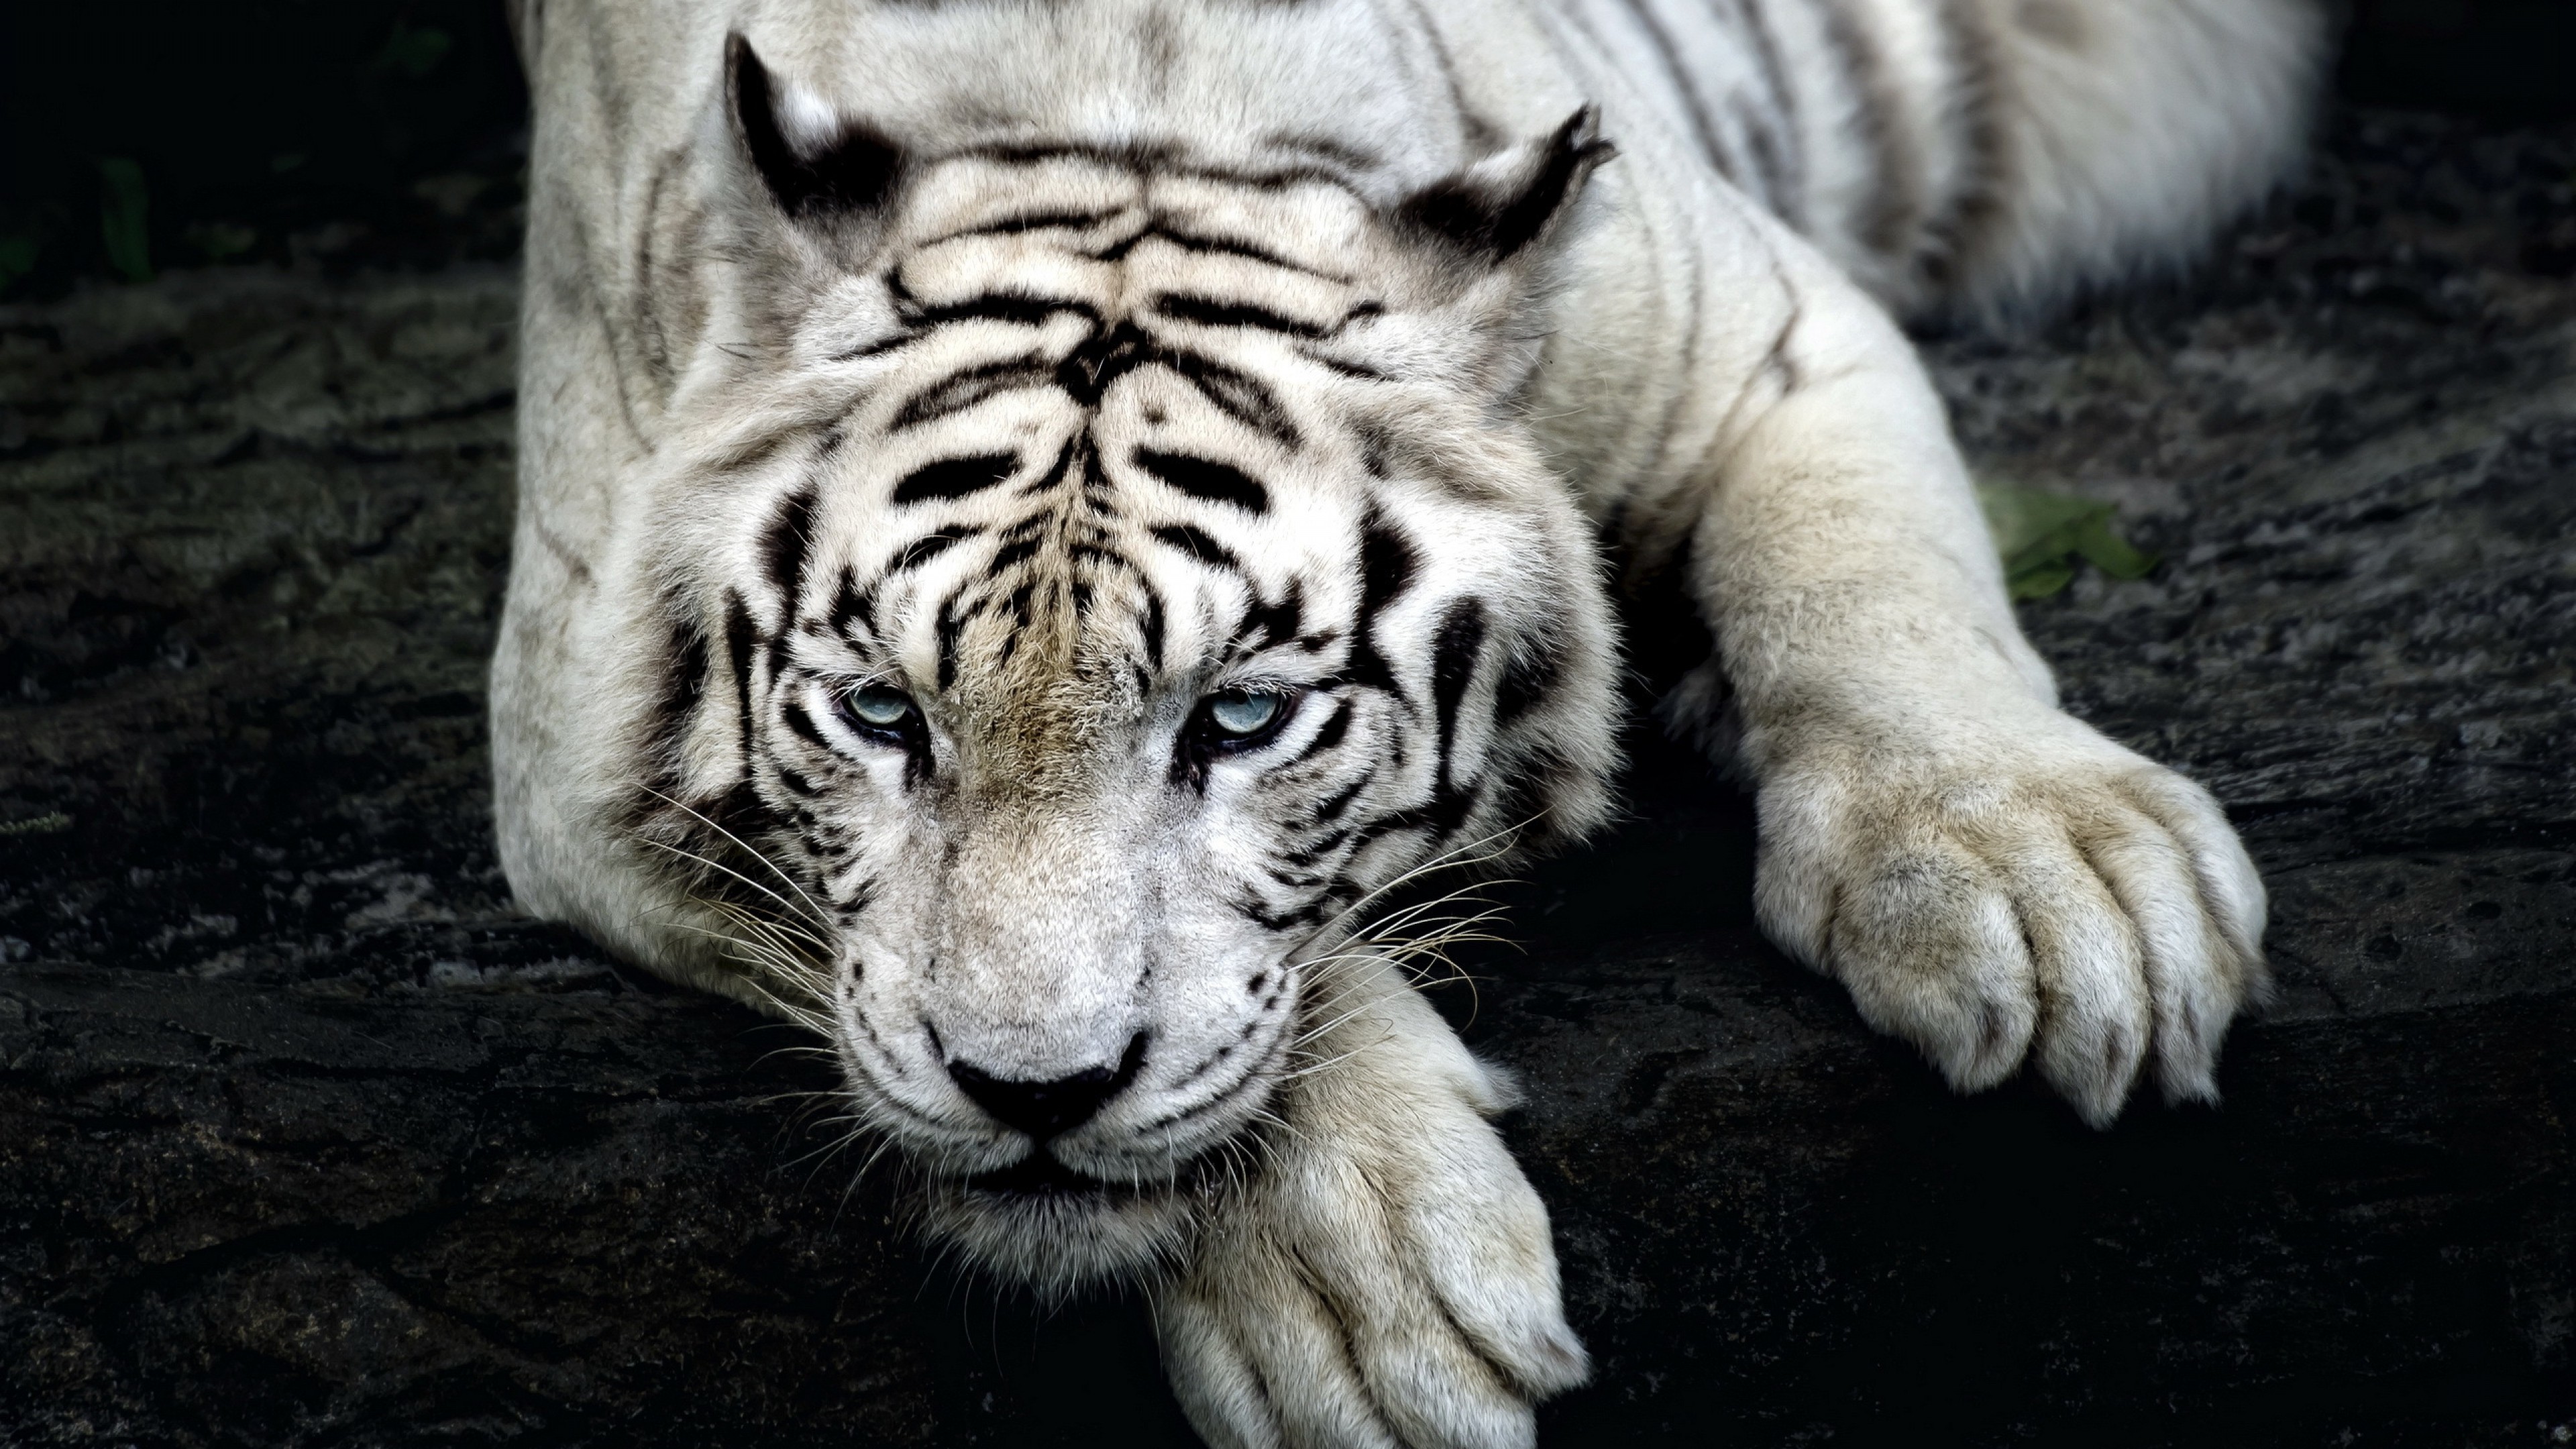 Wallpapers tiger animals predator on the desktop